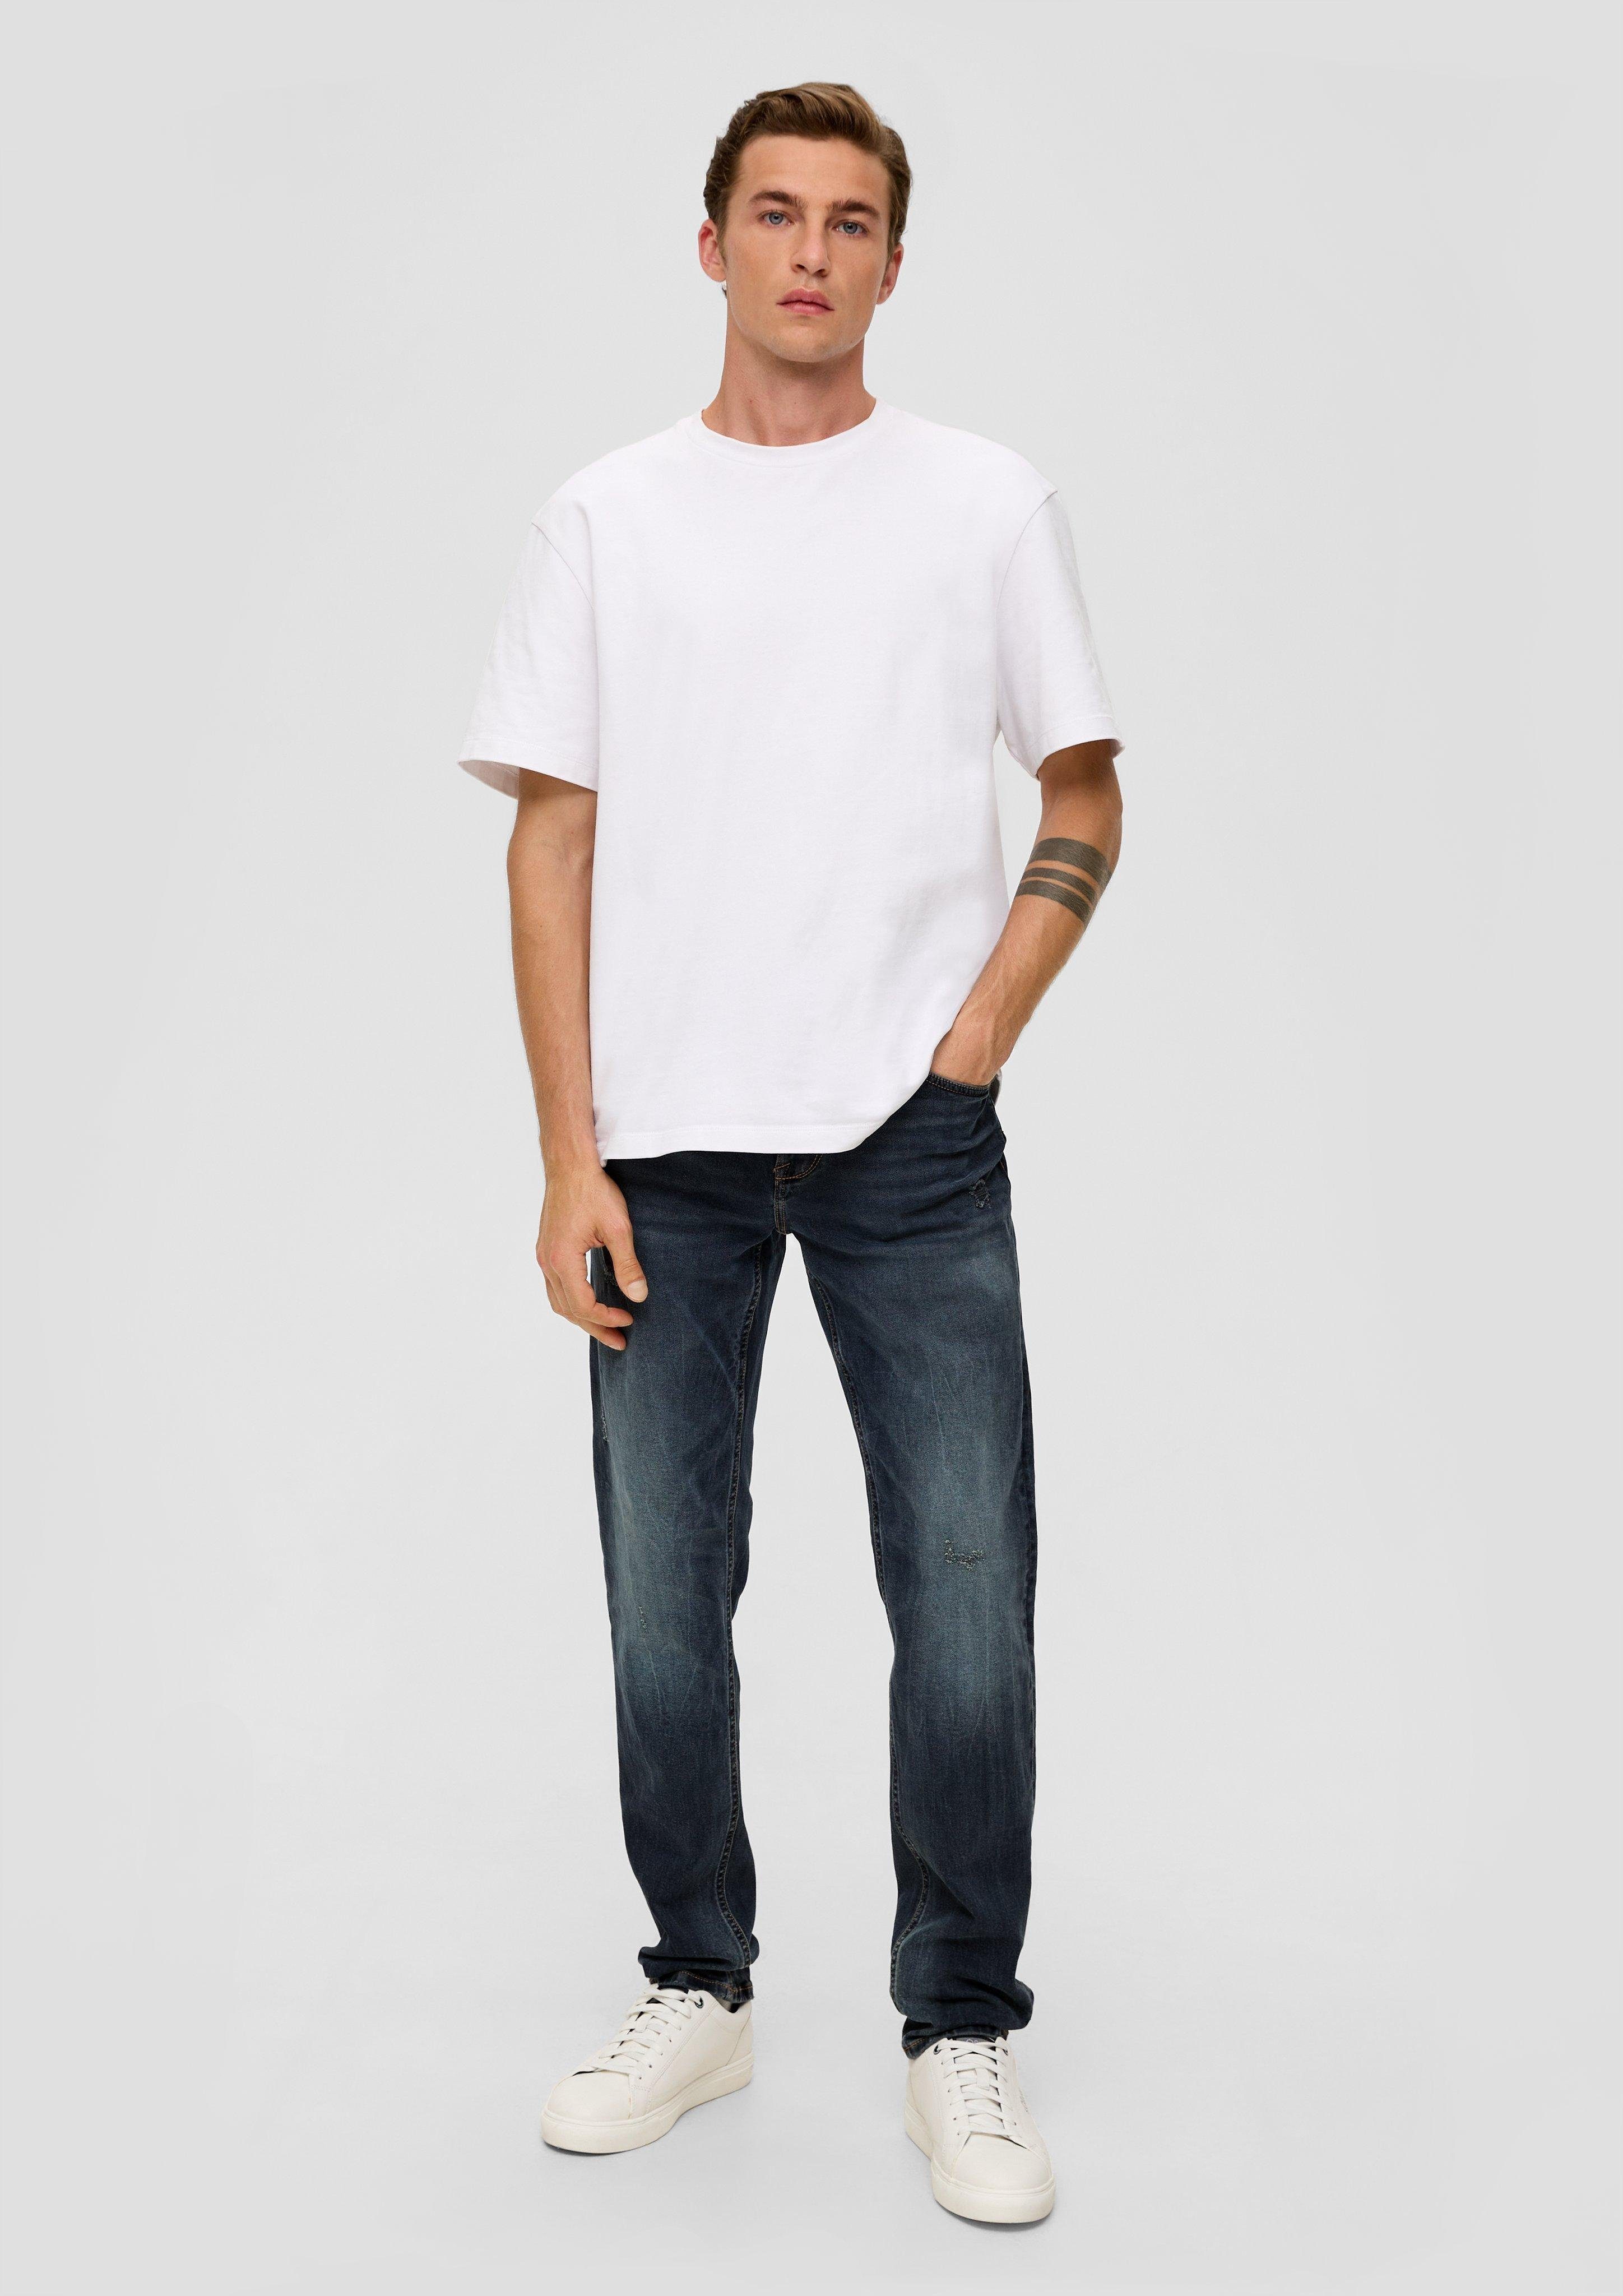 Jeans Leg s.Oliver dunkelblau Slim Fit Mid / Label-Patch, / Stoffhose Nelio Slim Rise Destroyes /